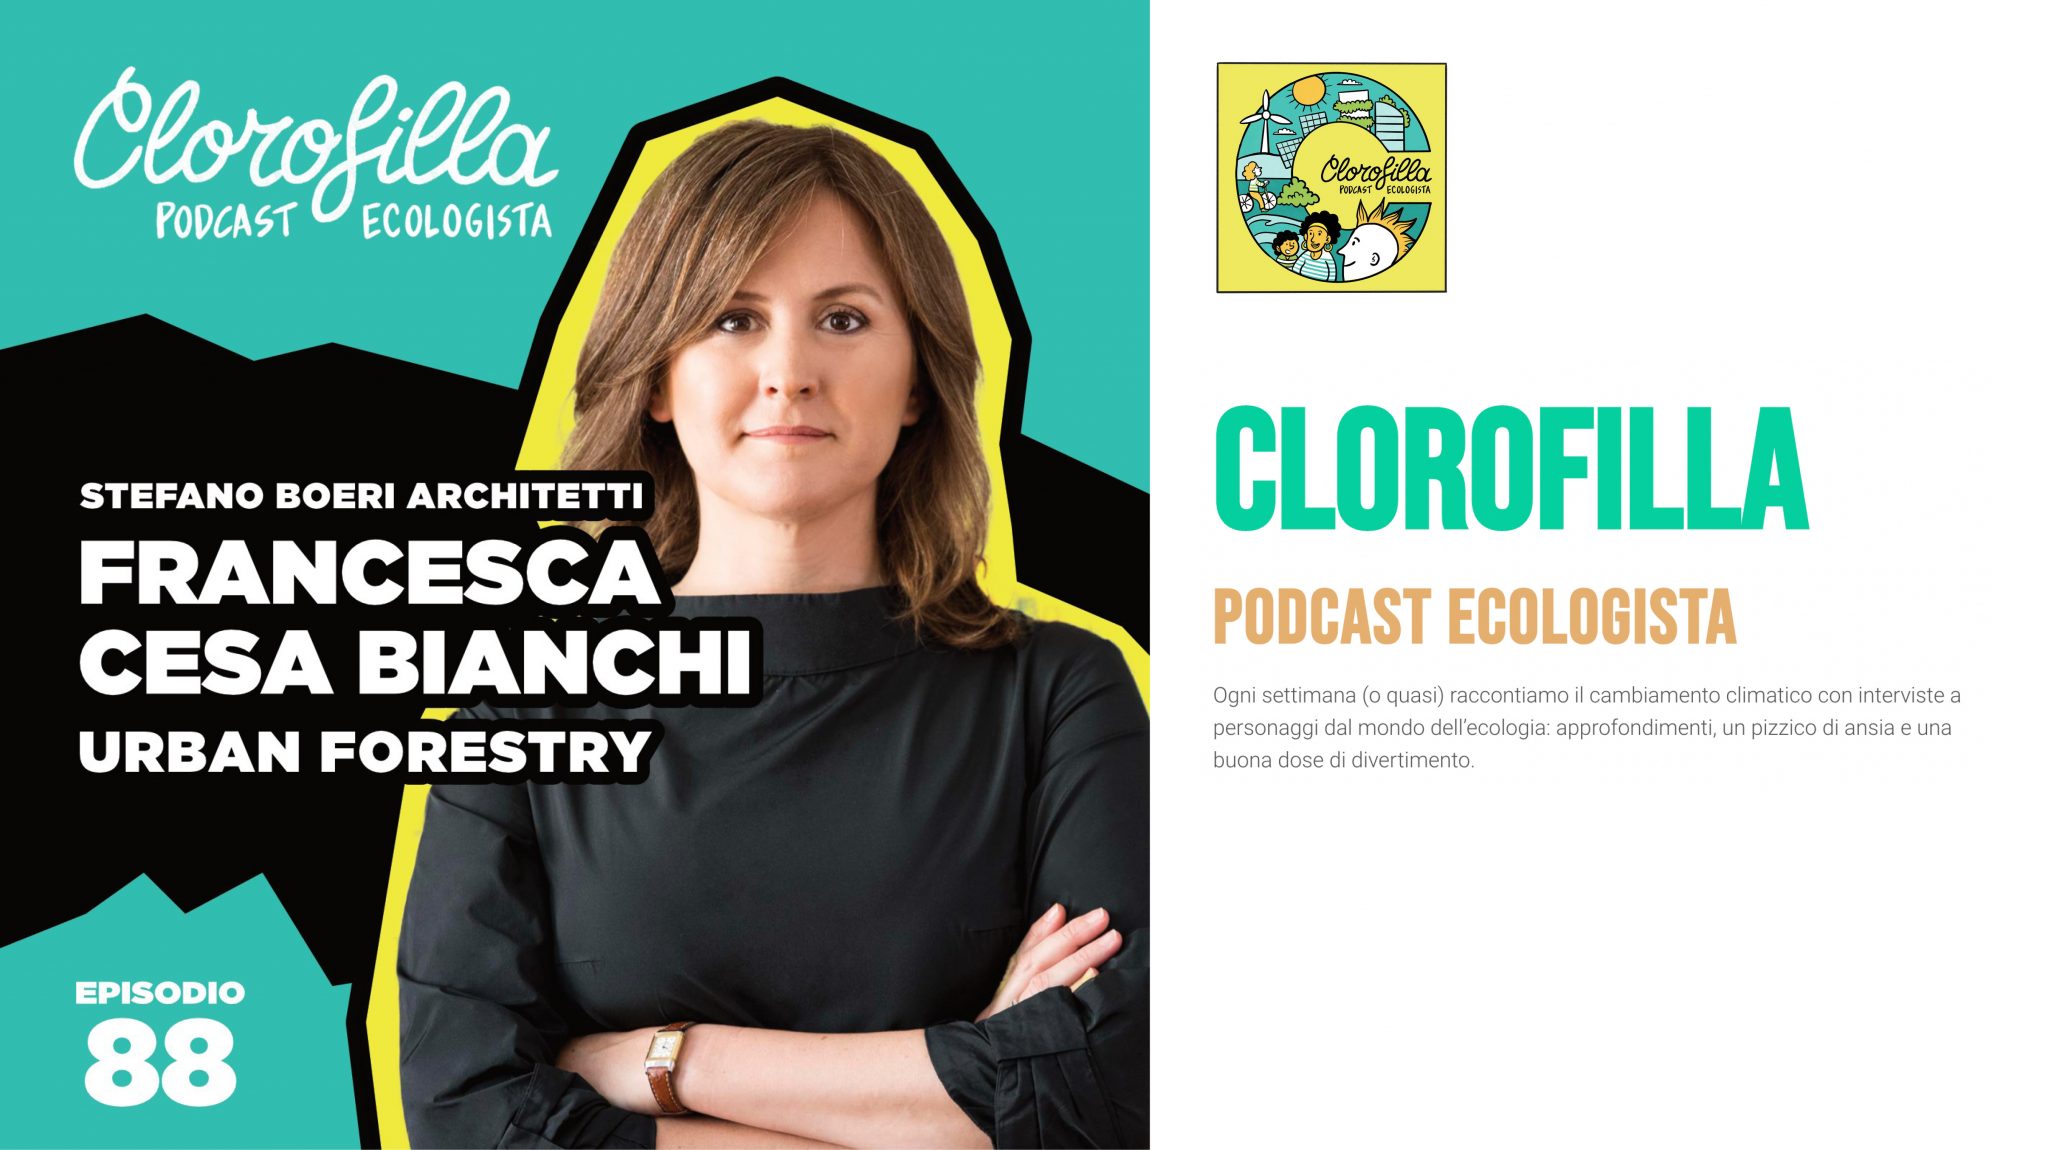 Francesca Cesa Bianchi ospite a Clorofilla podcast